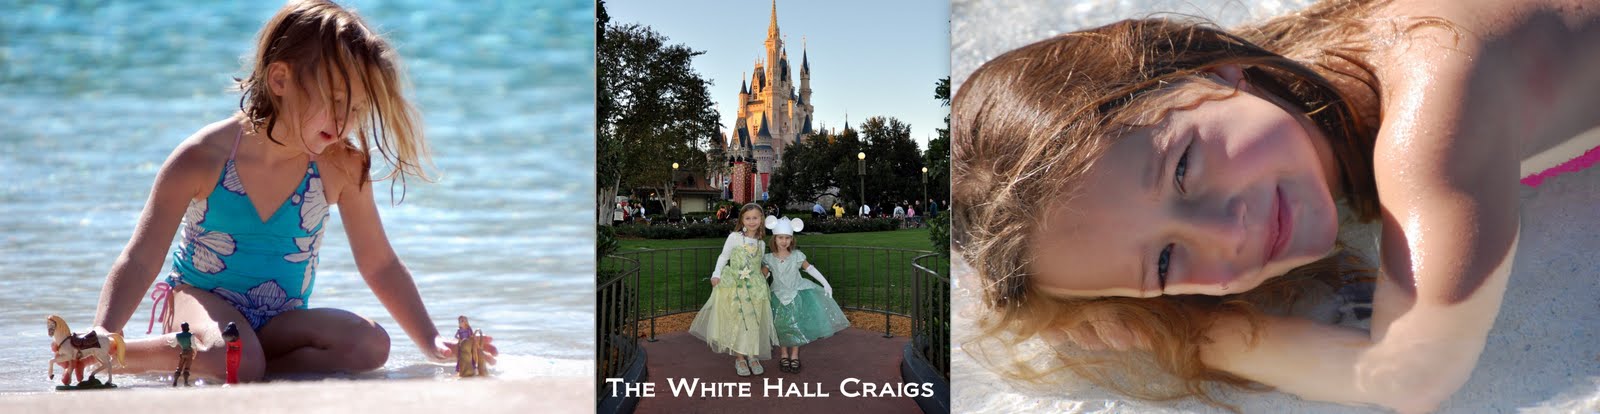 The White Hall Craigs